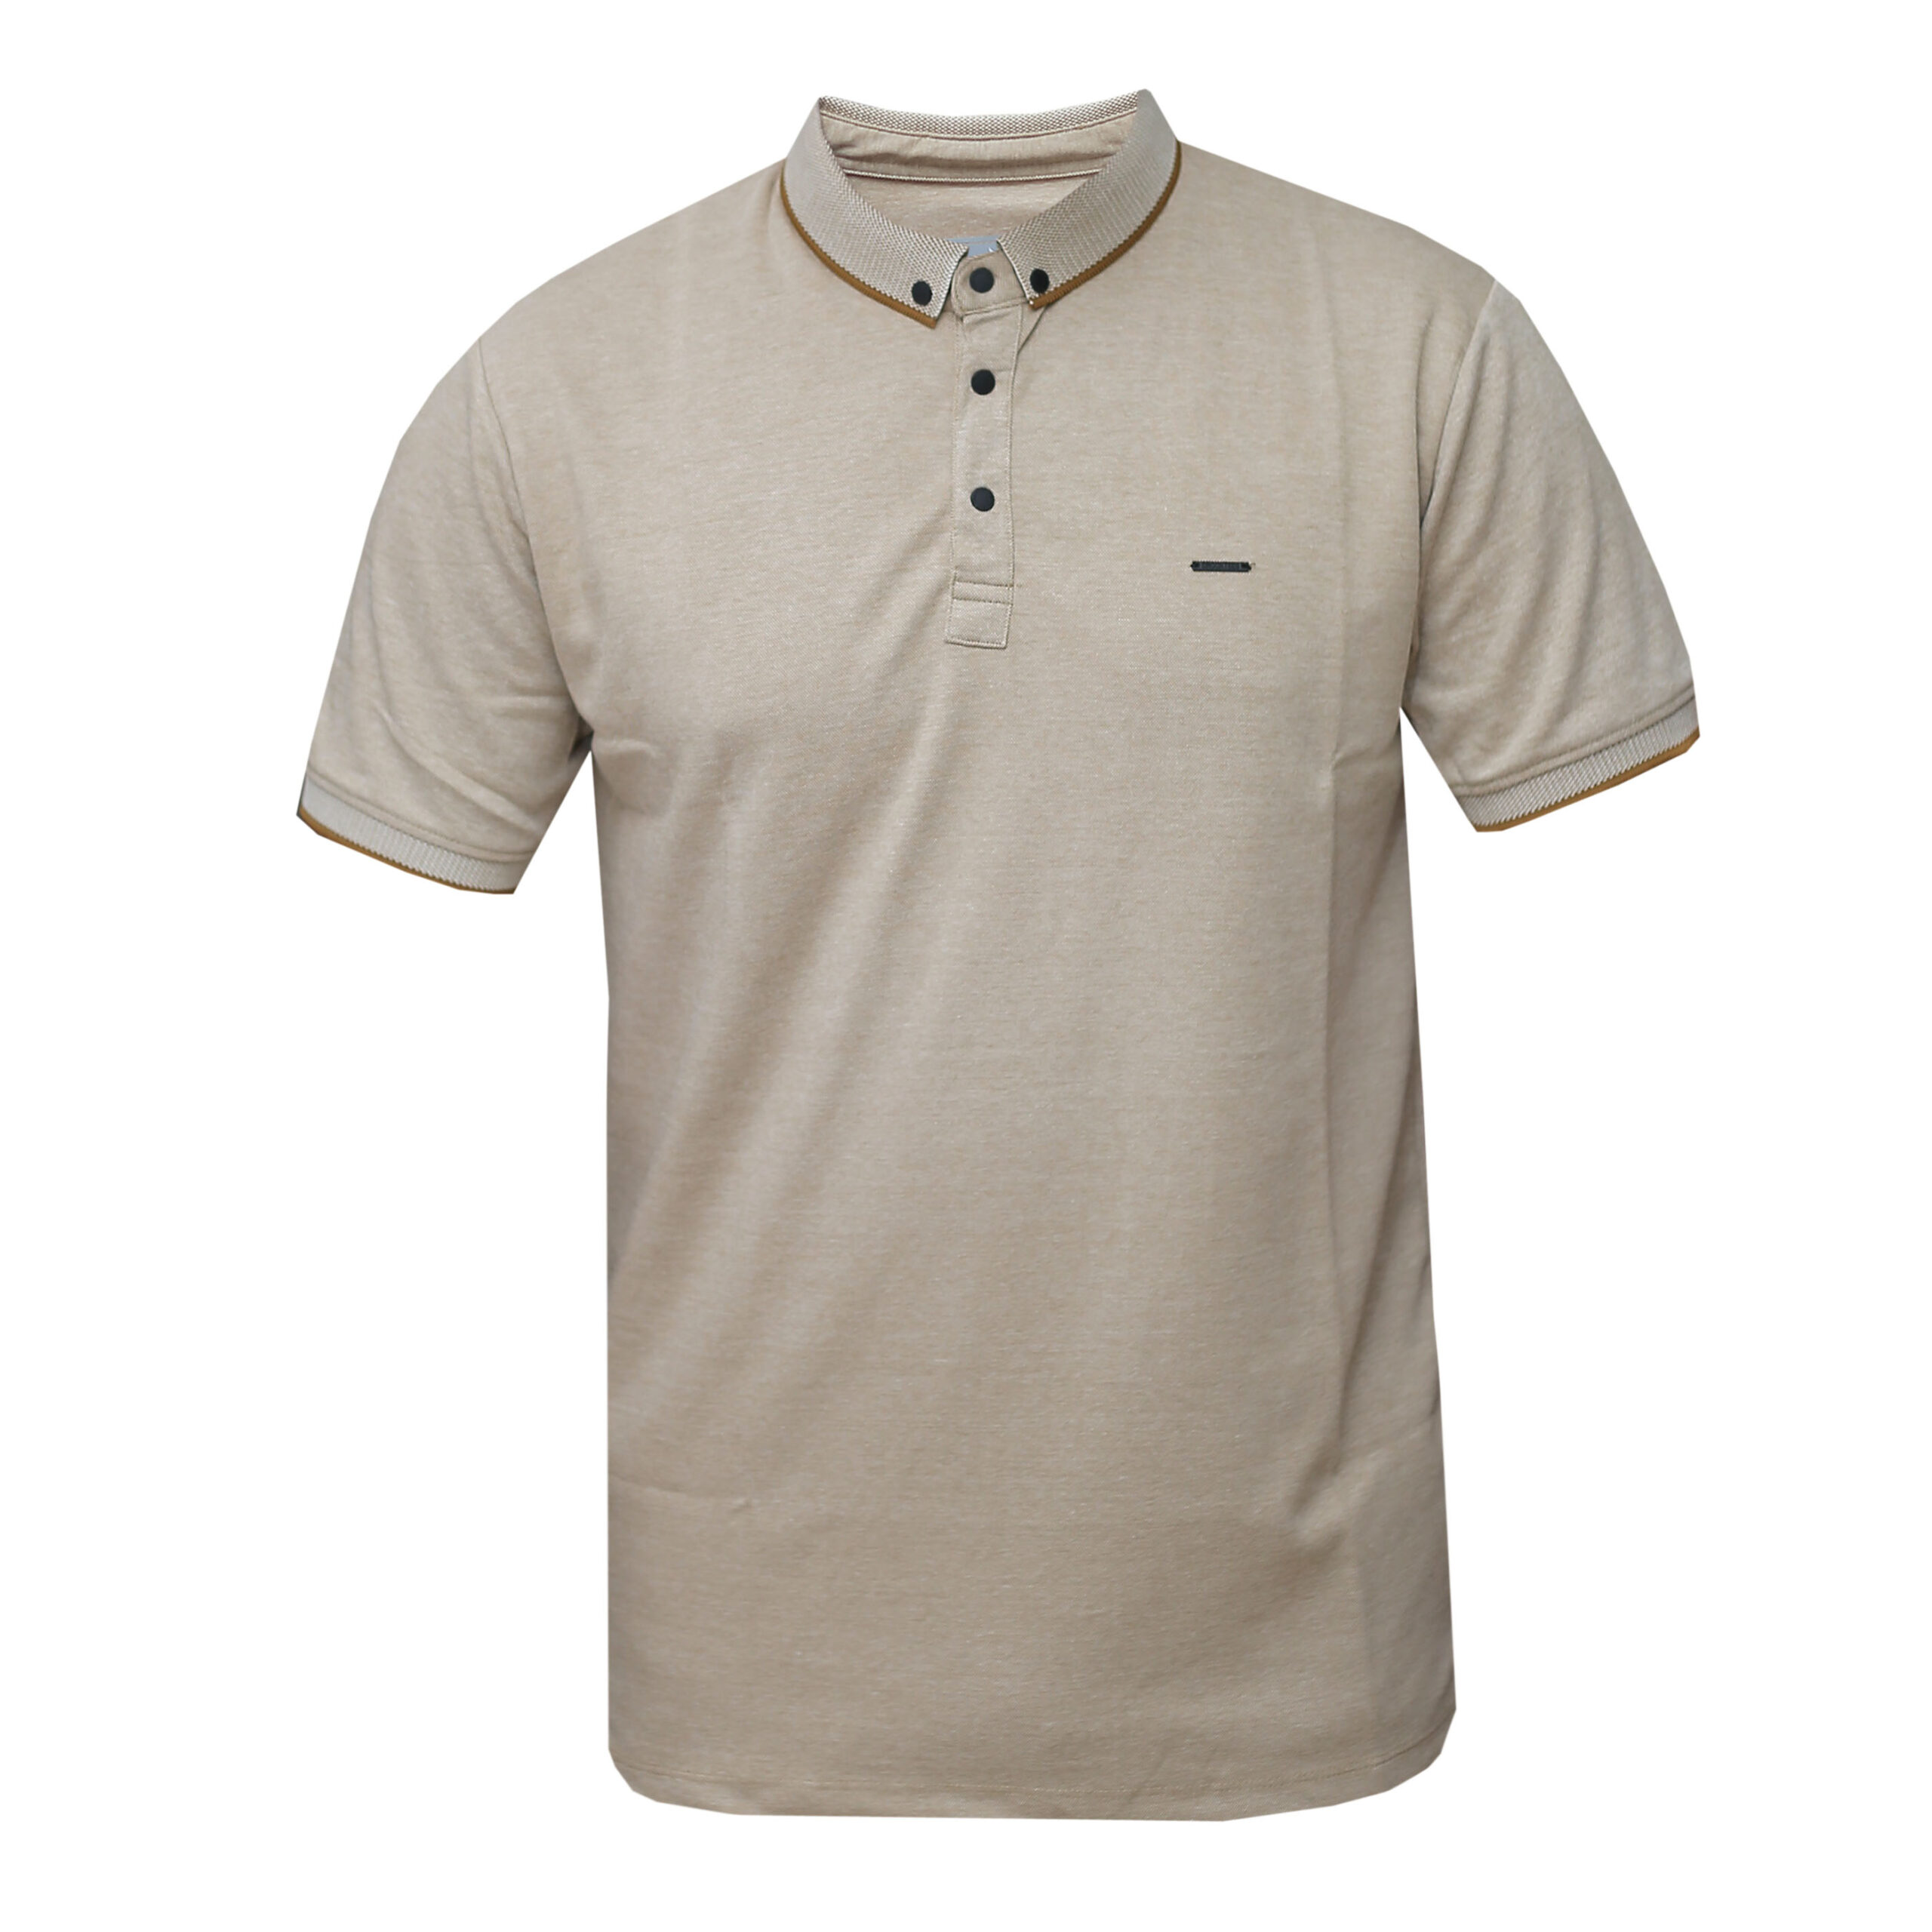 Collar T-Shirt For Men - Men's Polos Casual Wear